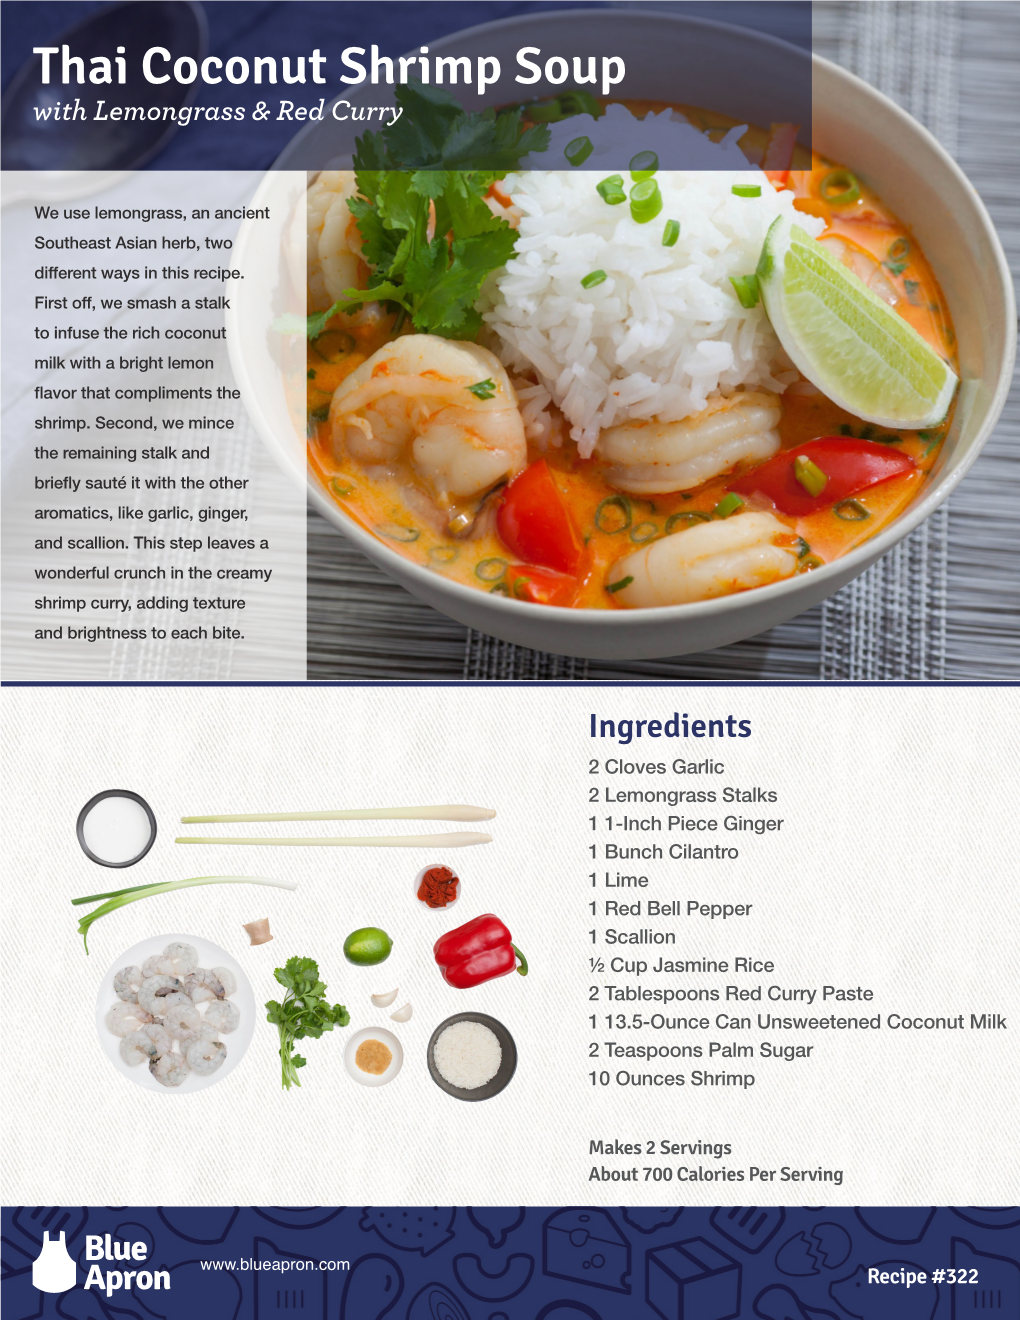 Thai Coconut Shrimp Soup with Lemongrass & Red Curry